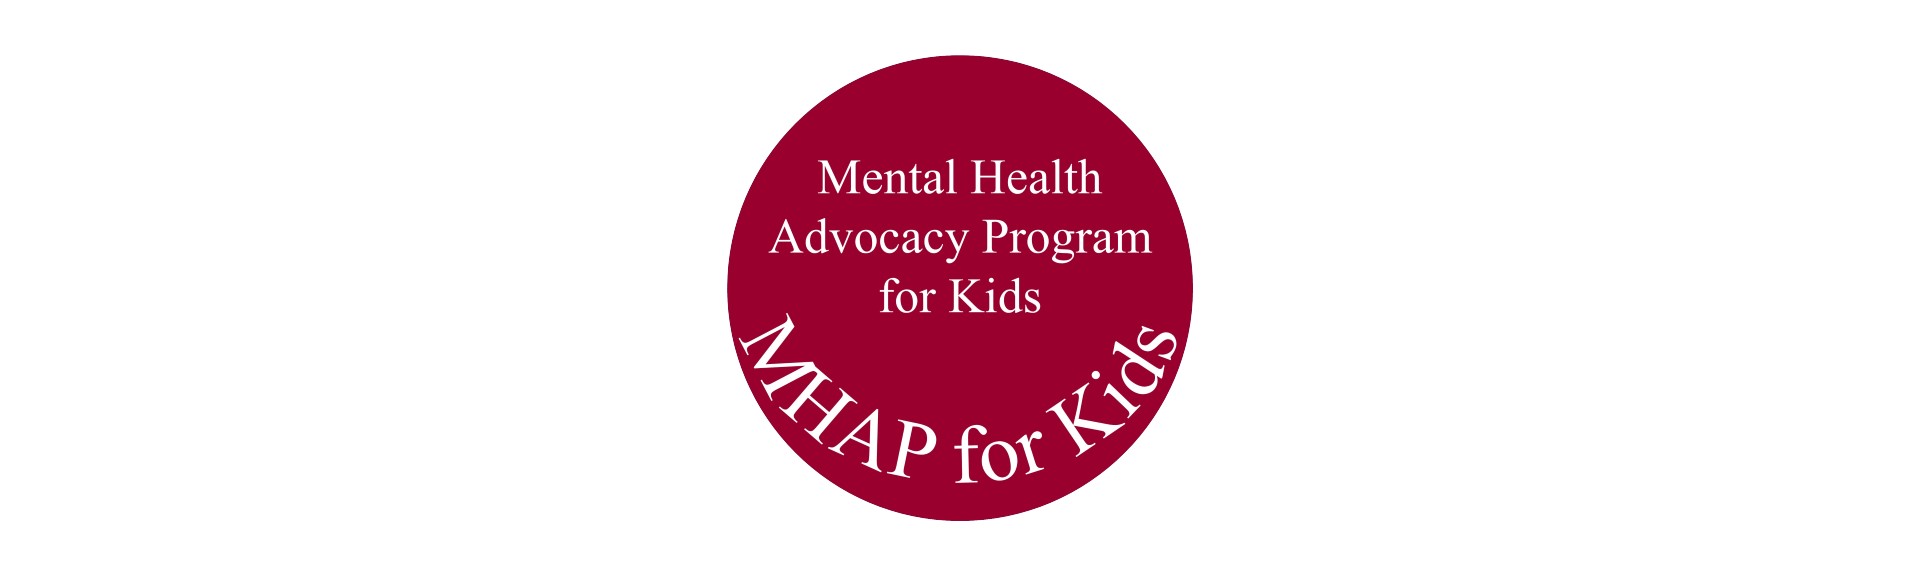 Mental Health Advocacy Program for Kids